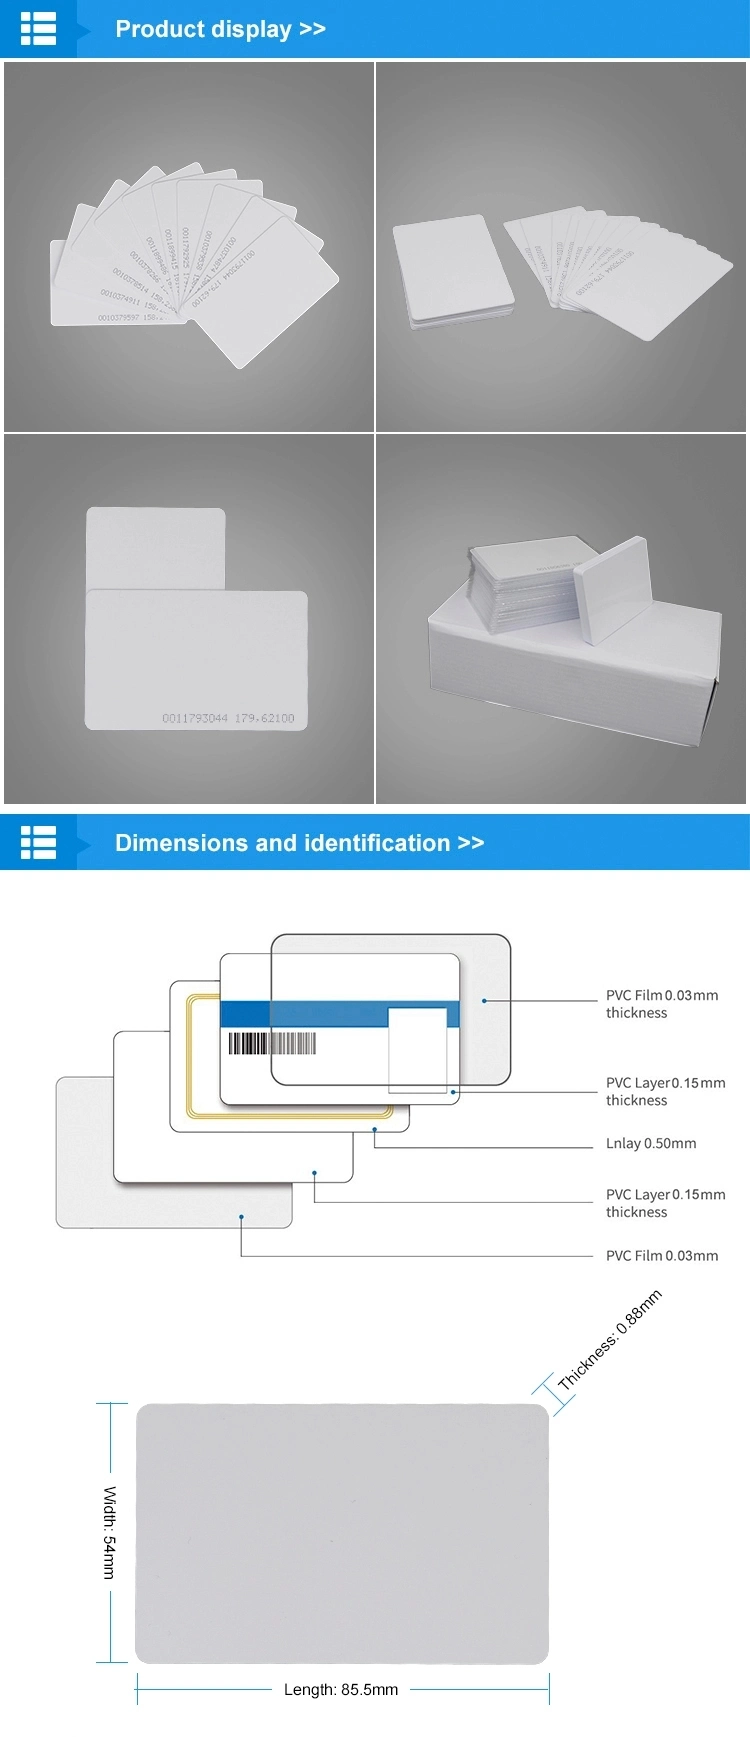 ID Thin Card 125kHz RFID PVC Blank Smart ID Card for Access Control